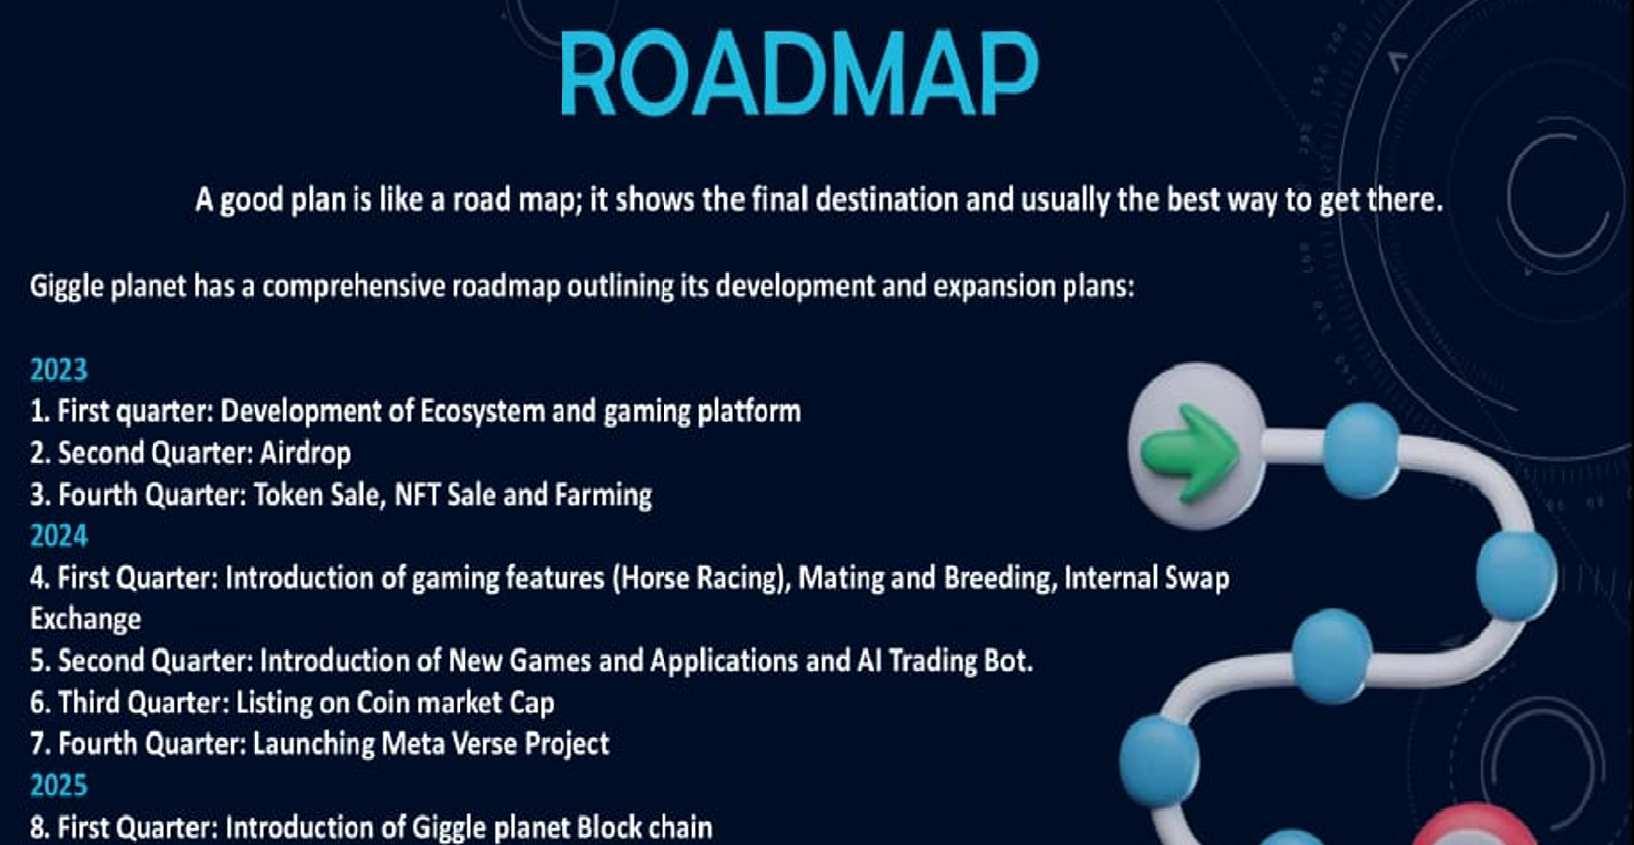 Roadmap Image